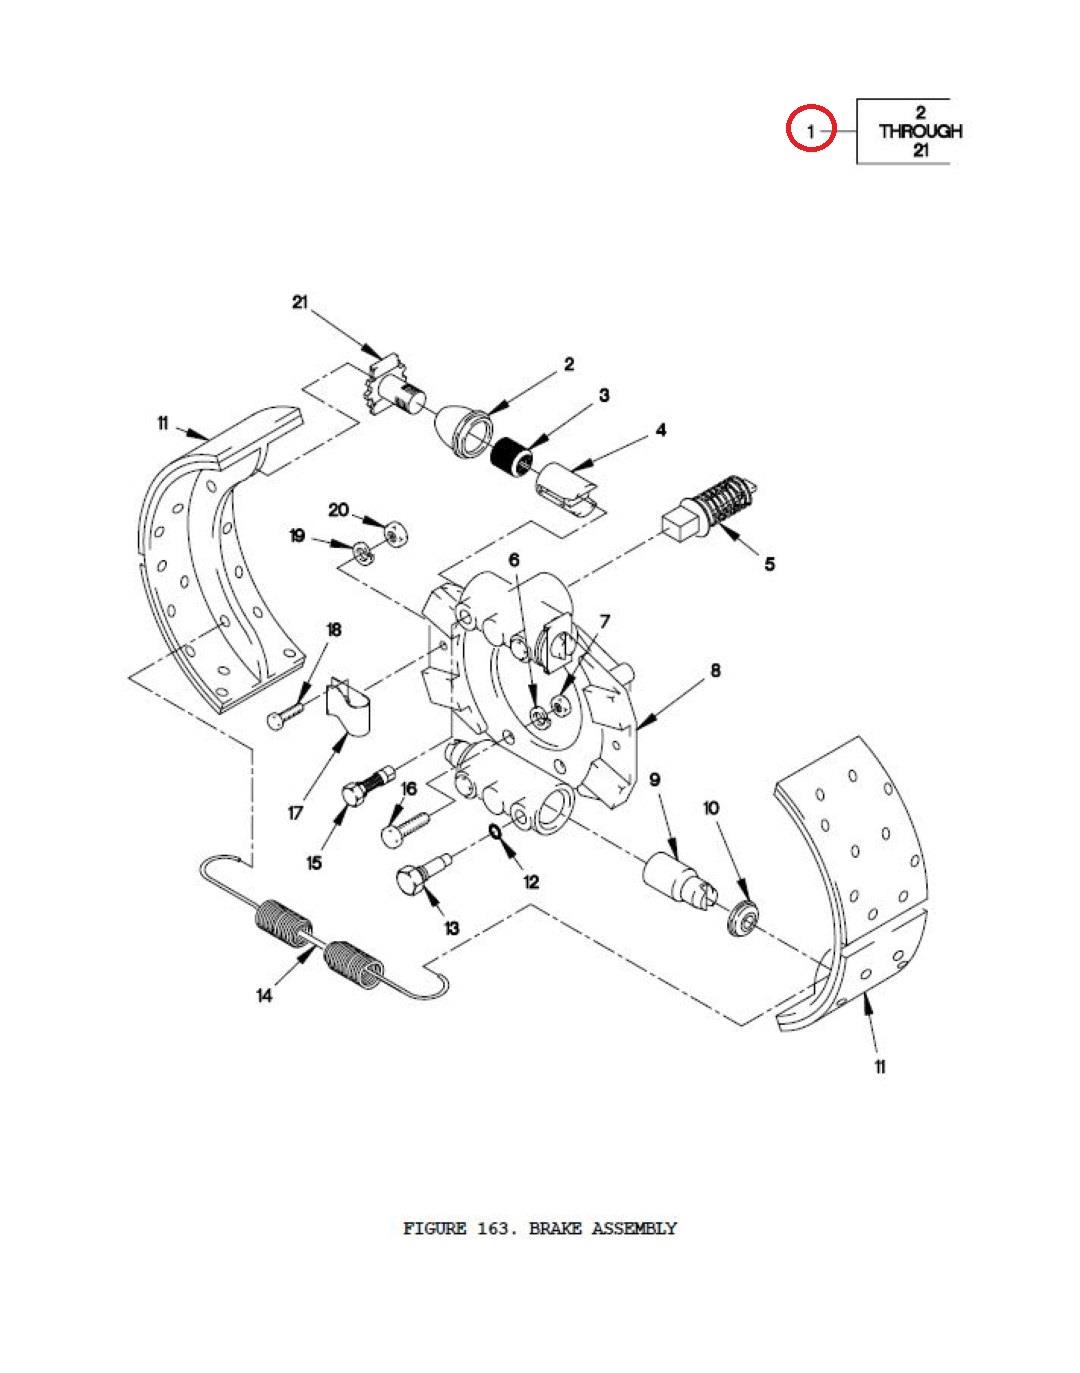 FM-340 | FM-340 FMTV Driver - Left Side Rear Axle Brake Assembly  Parts Diagram (2).JPG